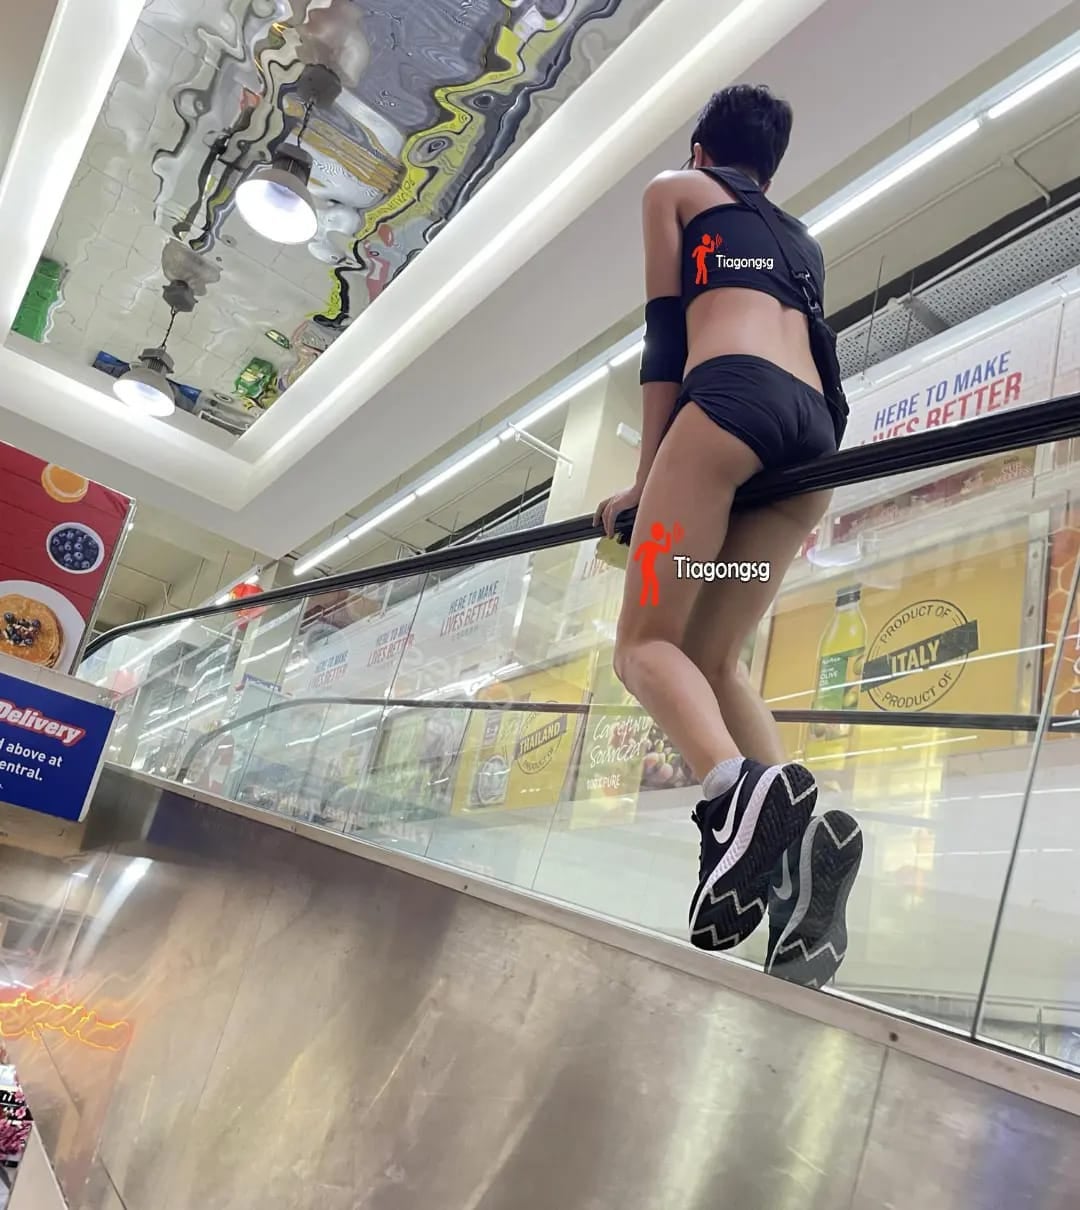 man rides escalator singapore wearing shorts and crop top